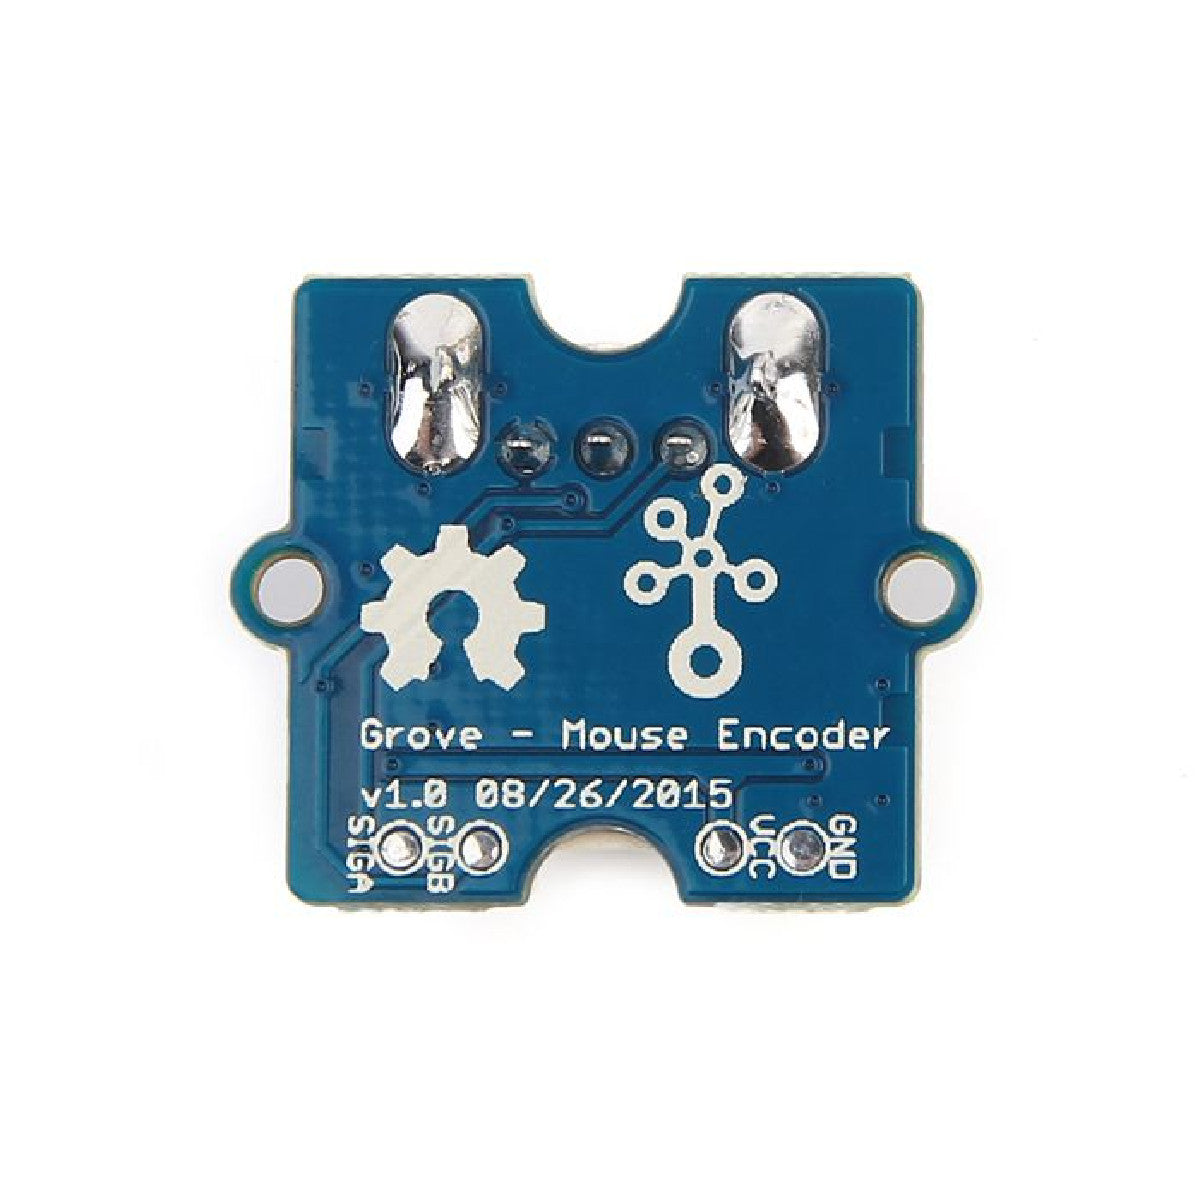 Seeed Studio Grove Mouse Encoder